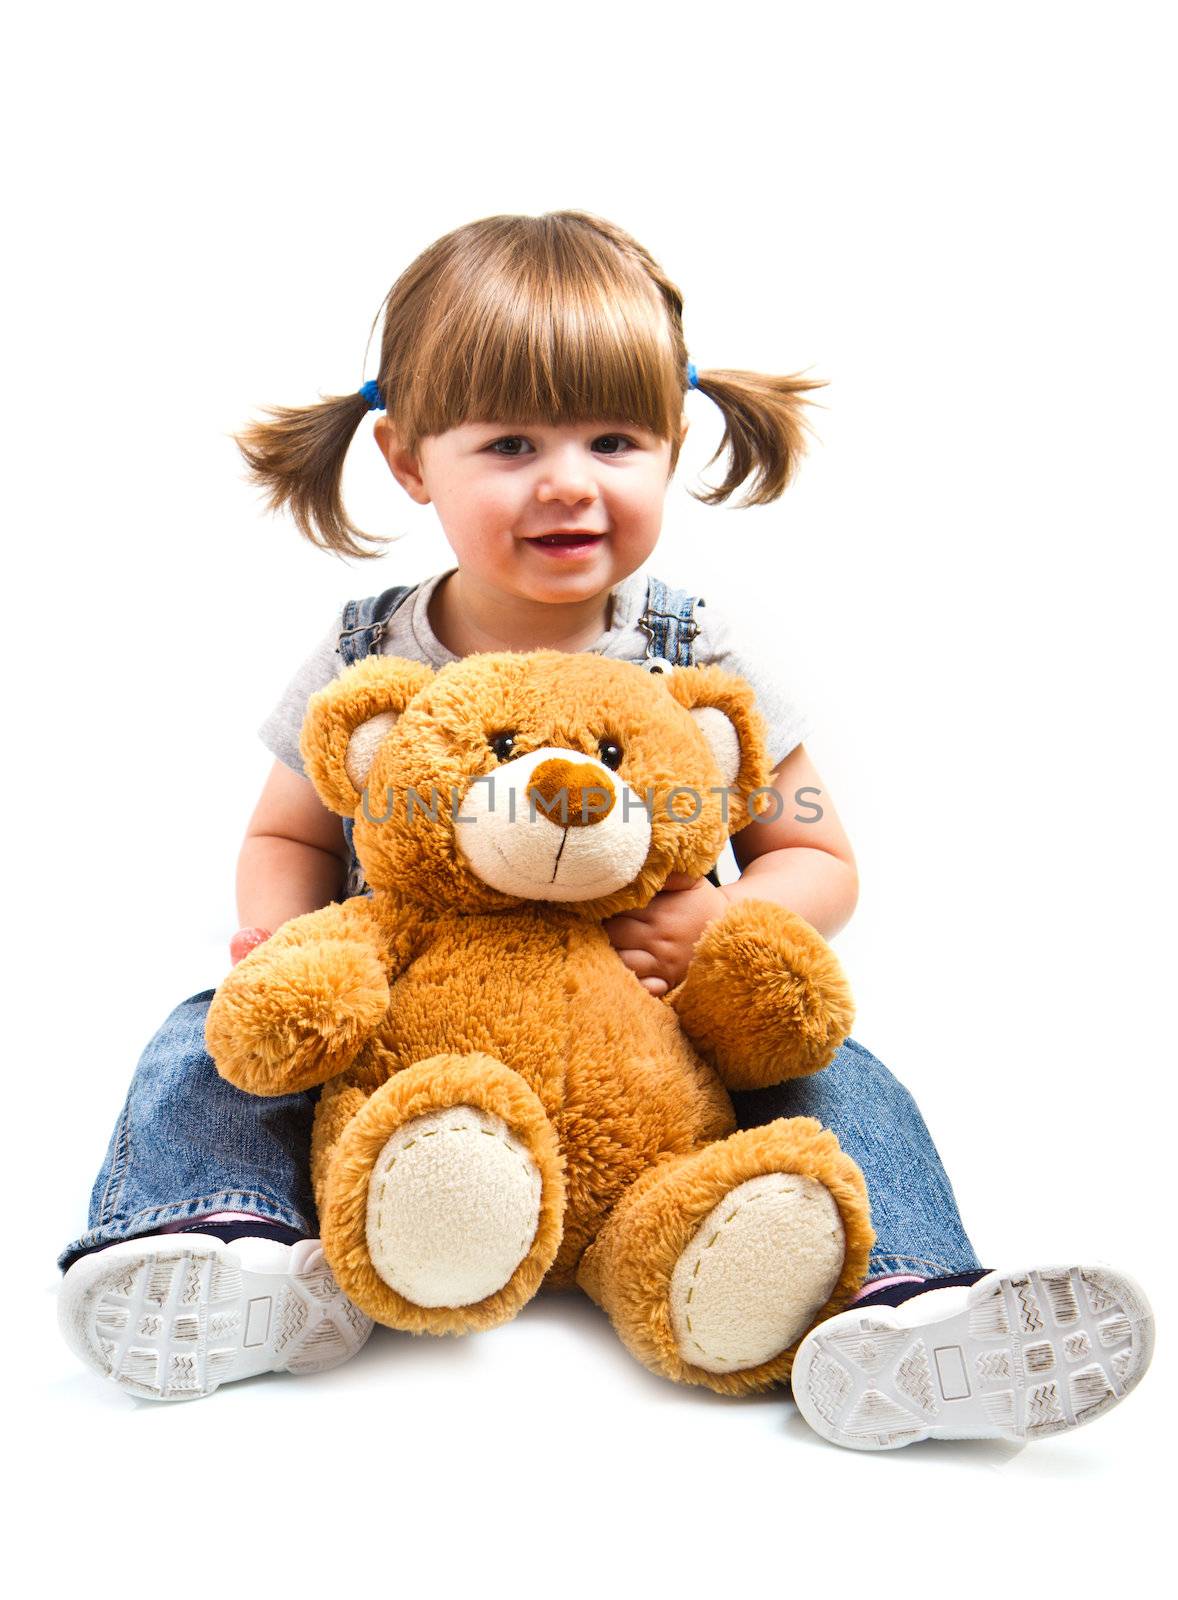 adorable toddler girl hugging a teddy bear by lsantilli